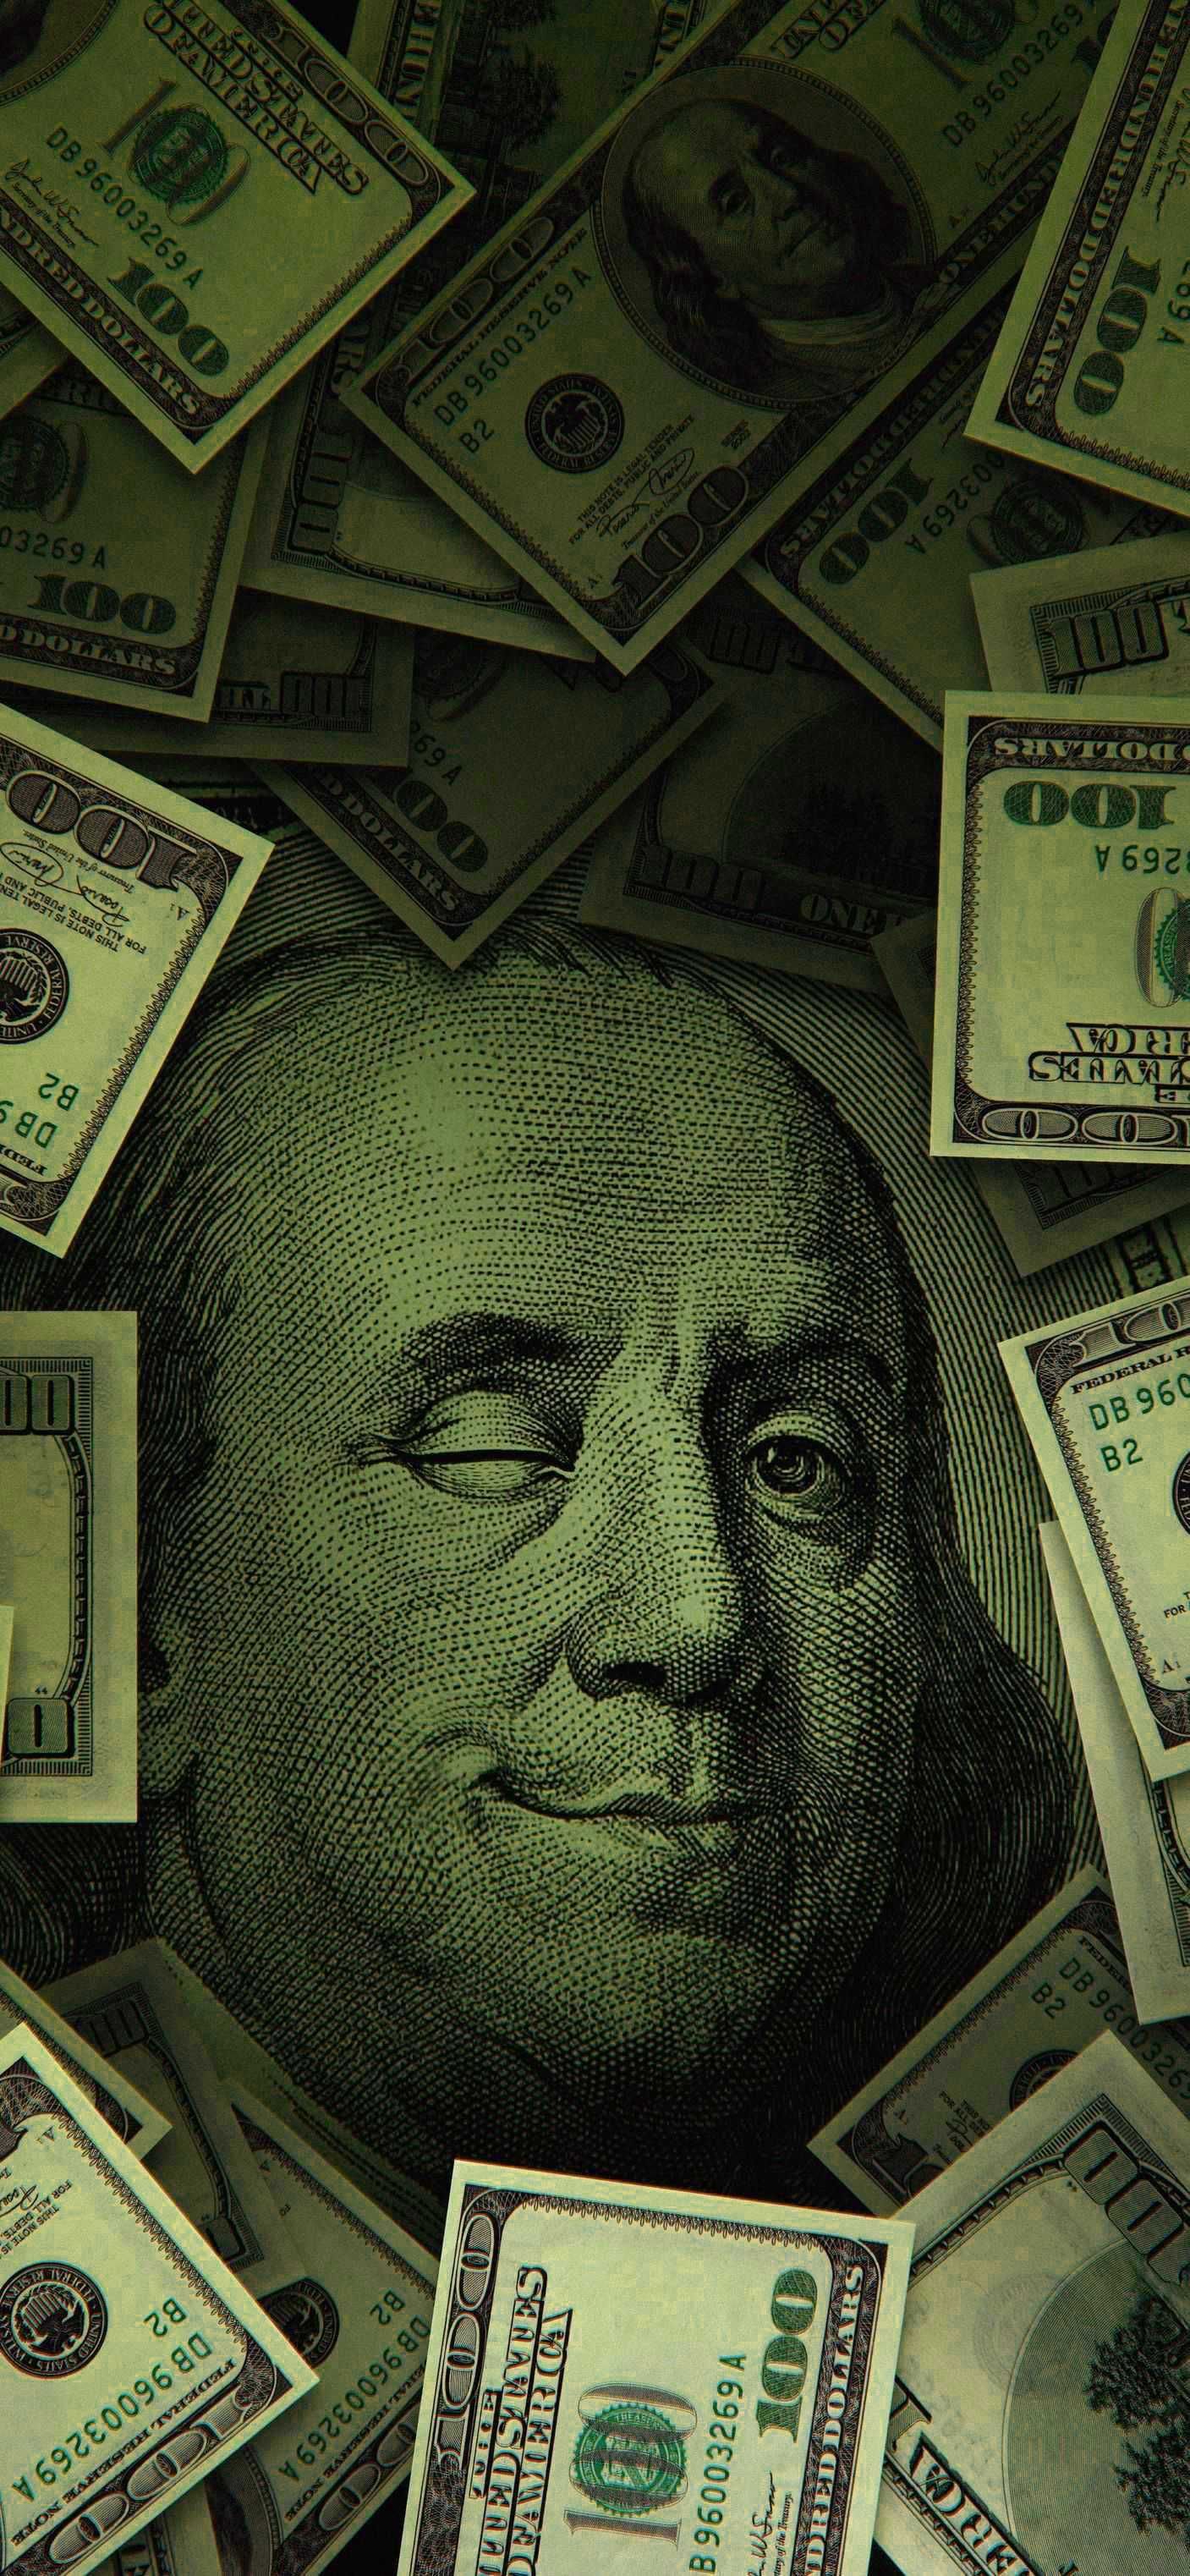 Benjamin Franklin's face on a pile of money - Money